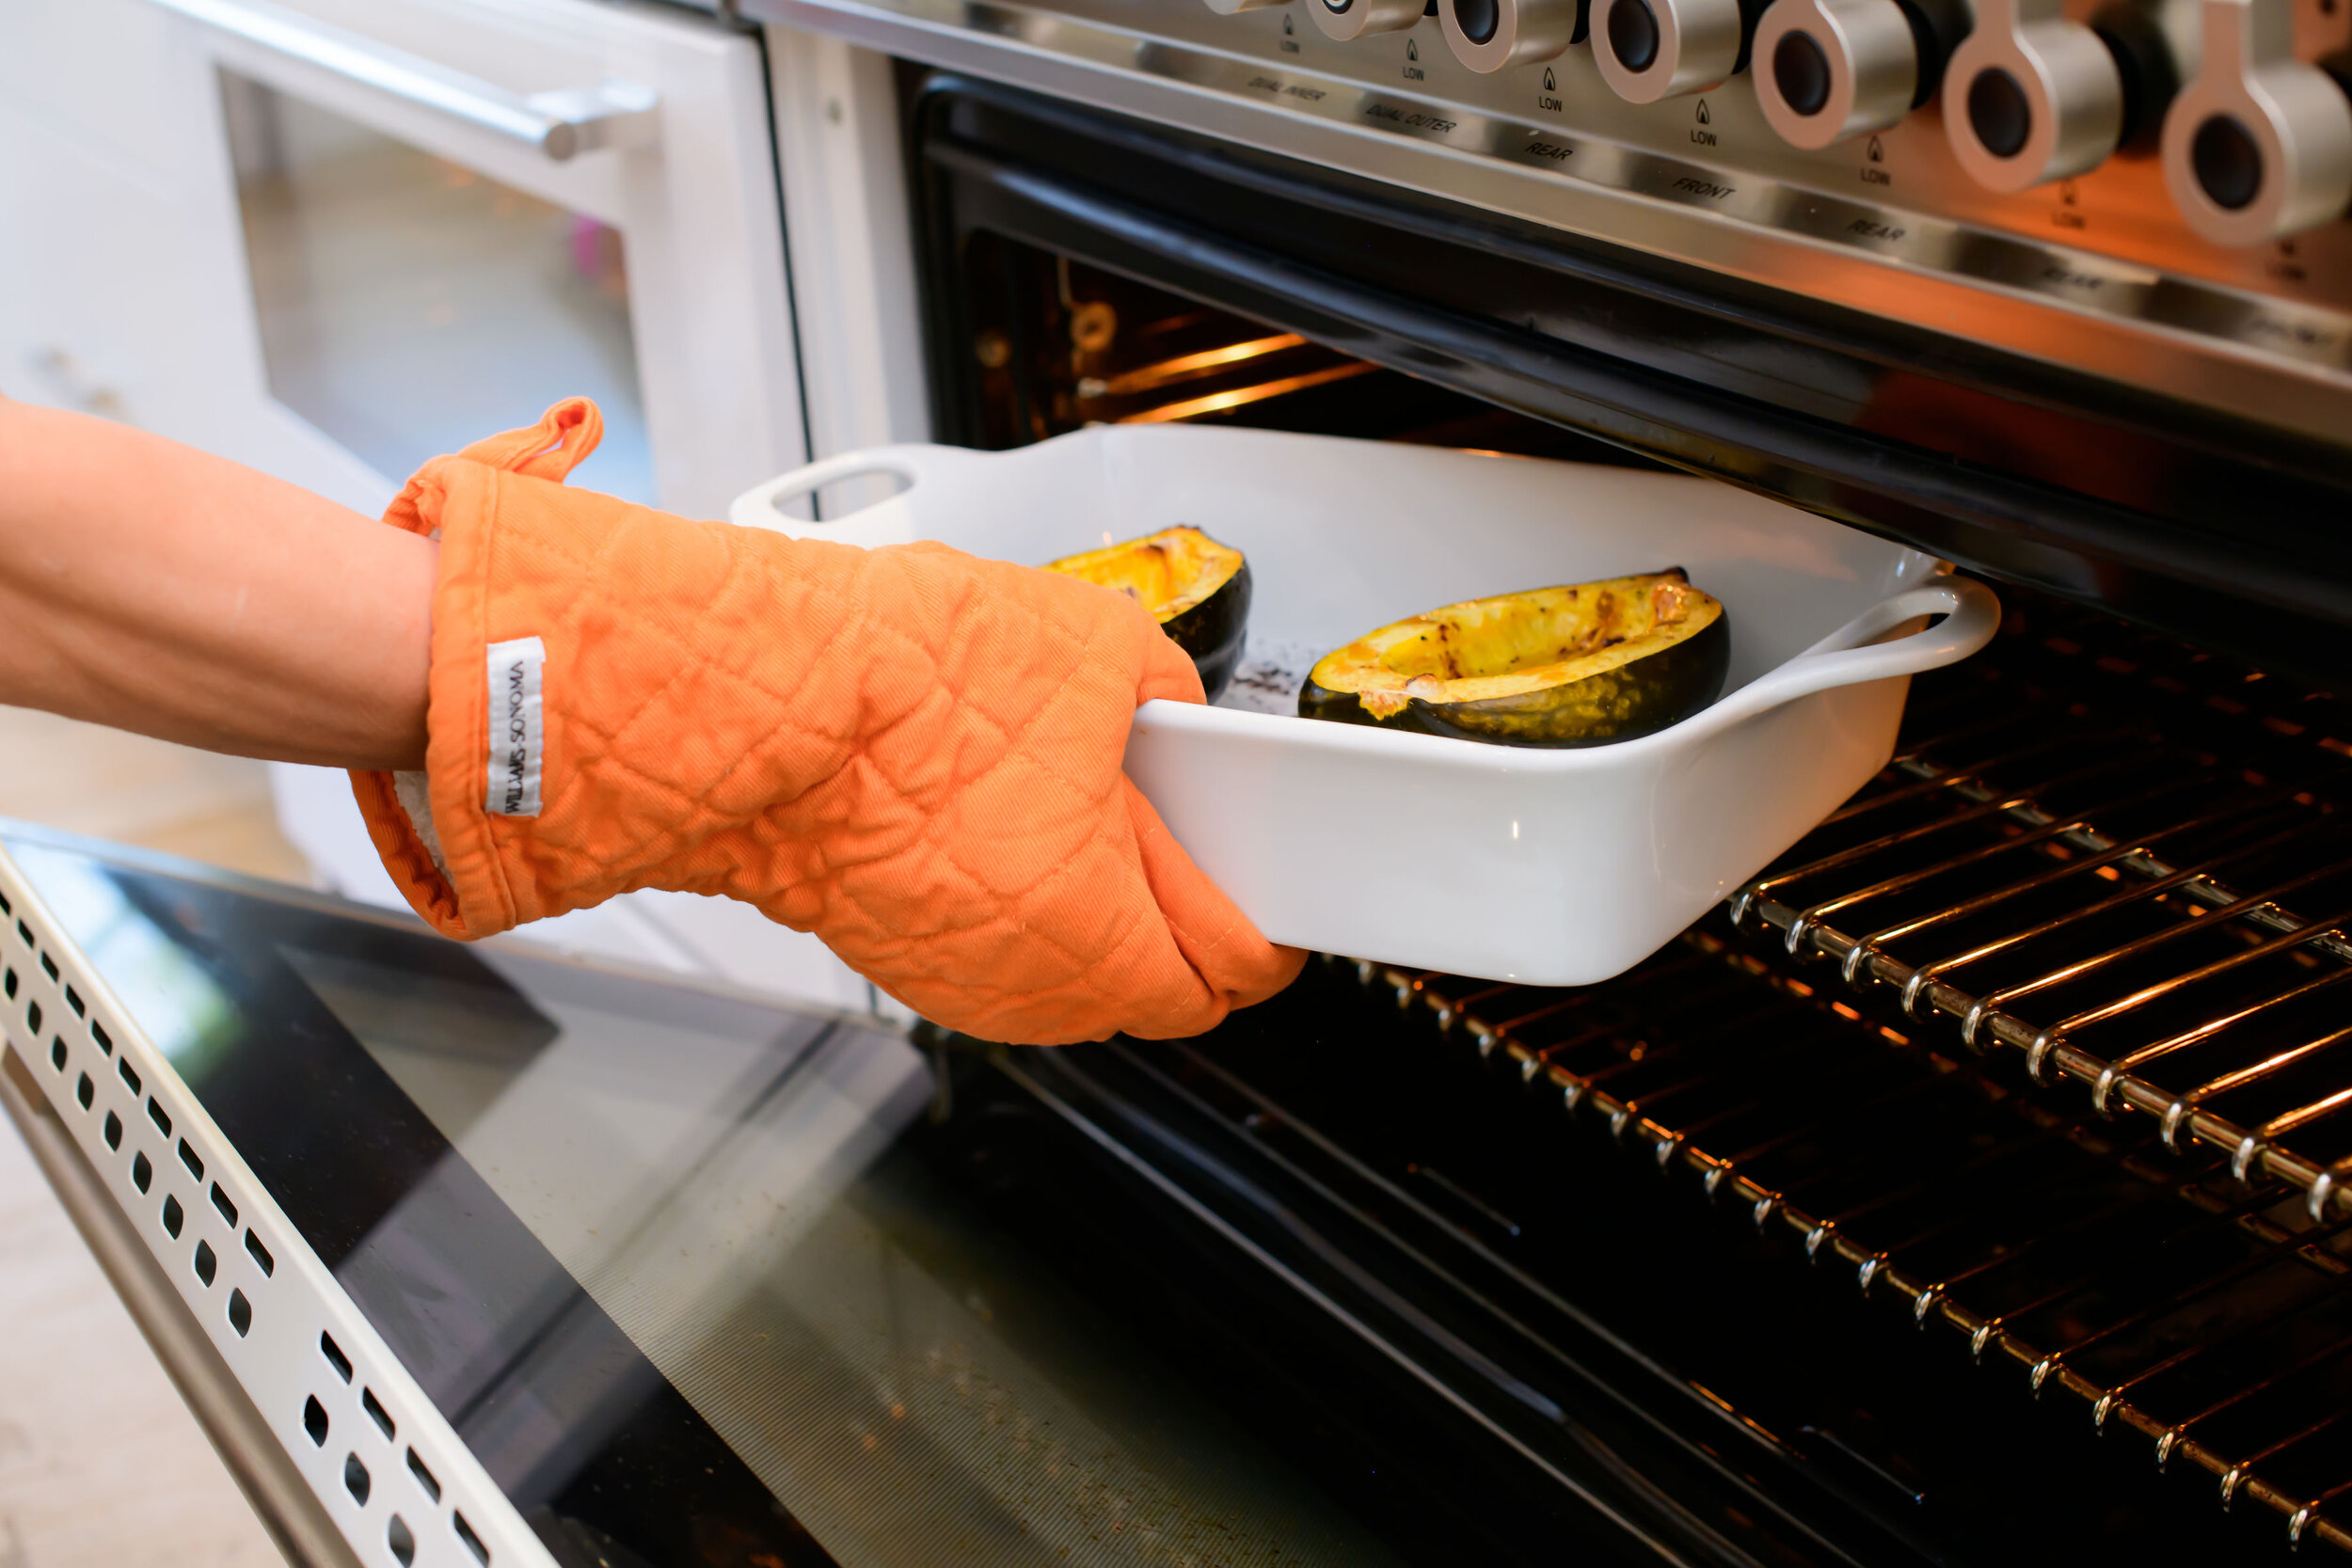 Making Baked Acorn Squash #recipe #foodblogger #cheff #acornsquash #bakedacornsquashrecipe